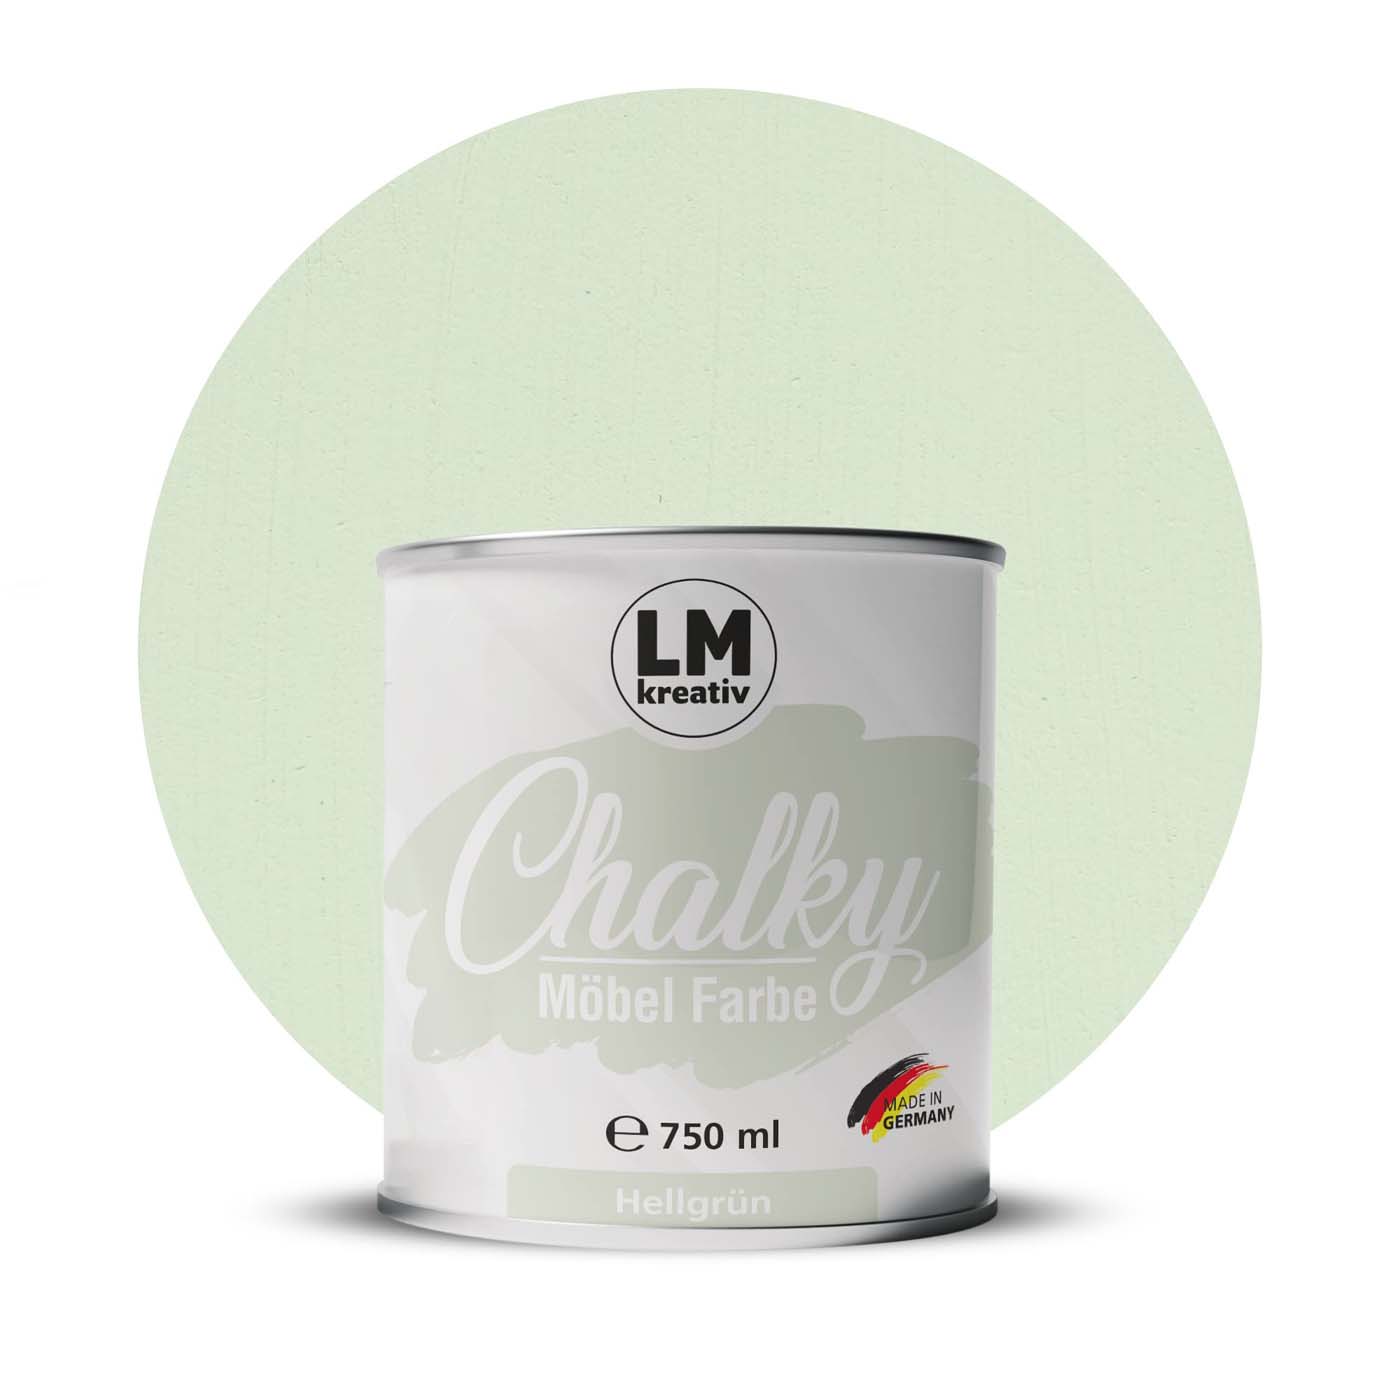 Chalky-Möbelfarbe-750-ml-1-05-kg-Hellgrün